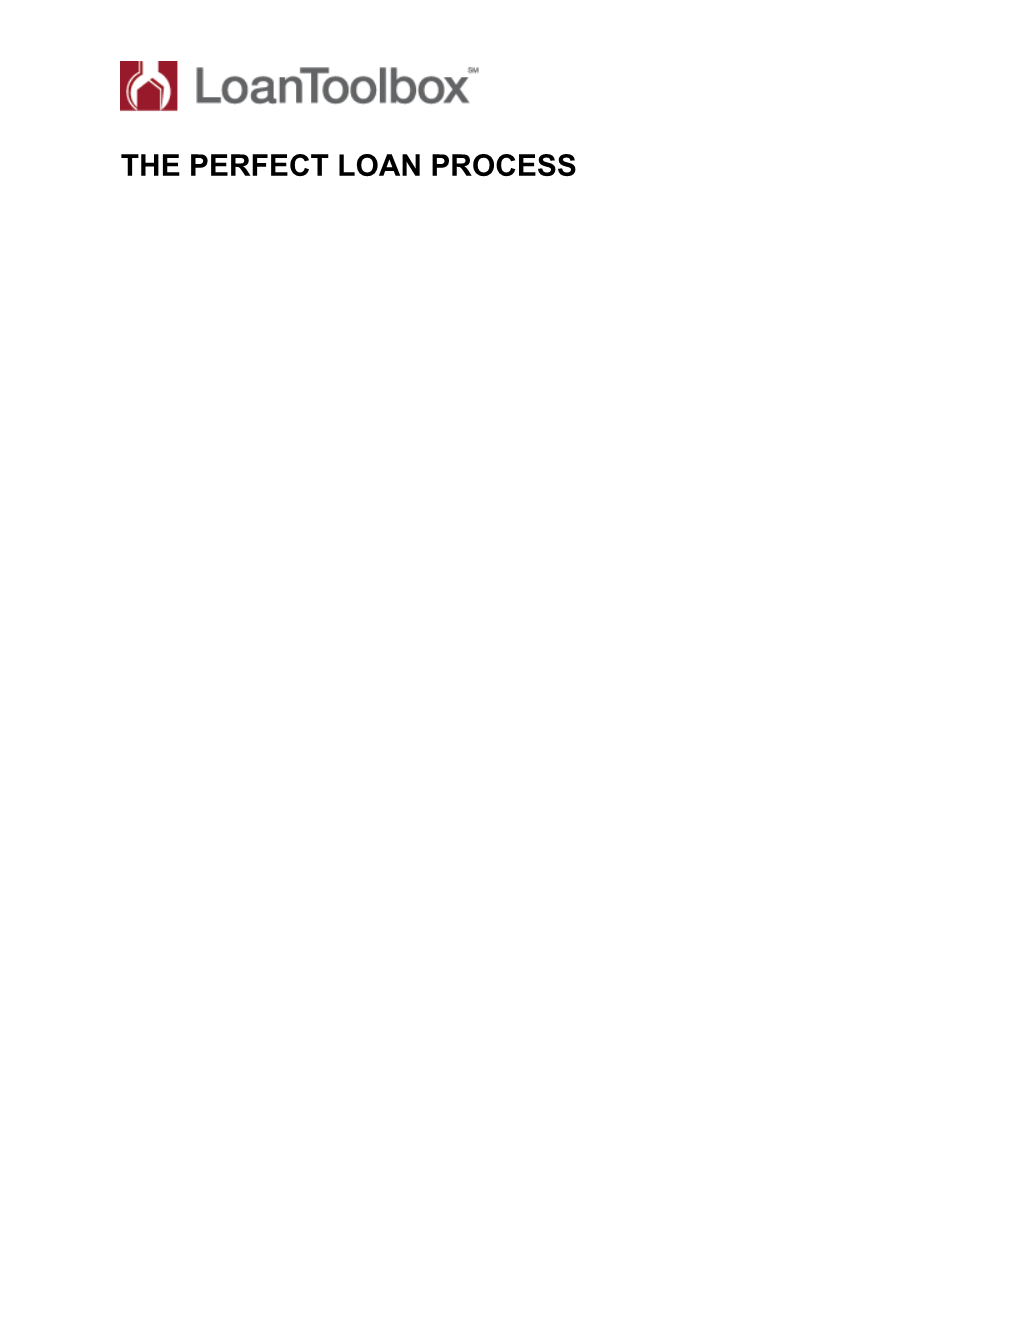 The Perfect Loan Process